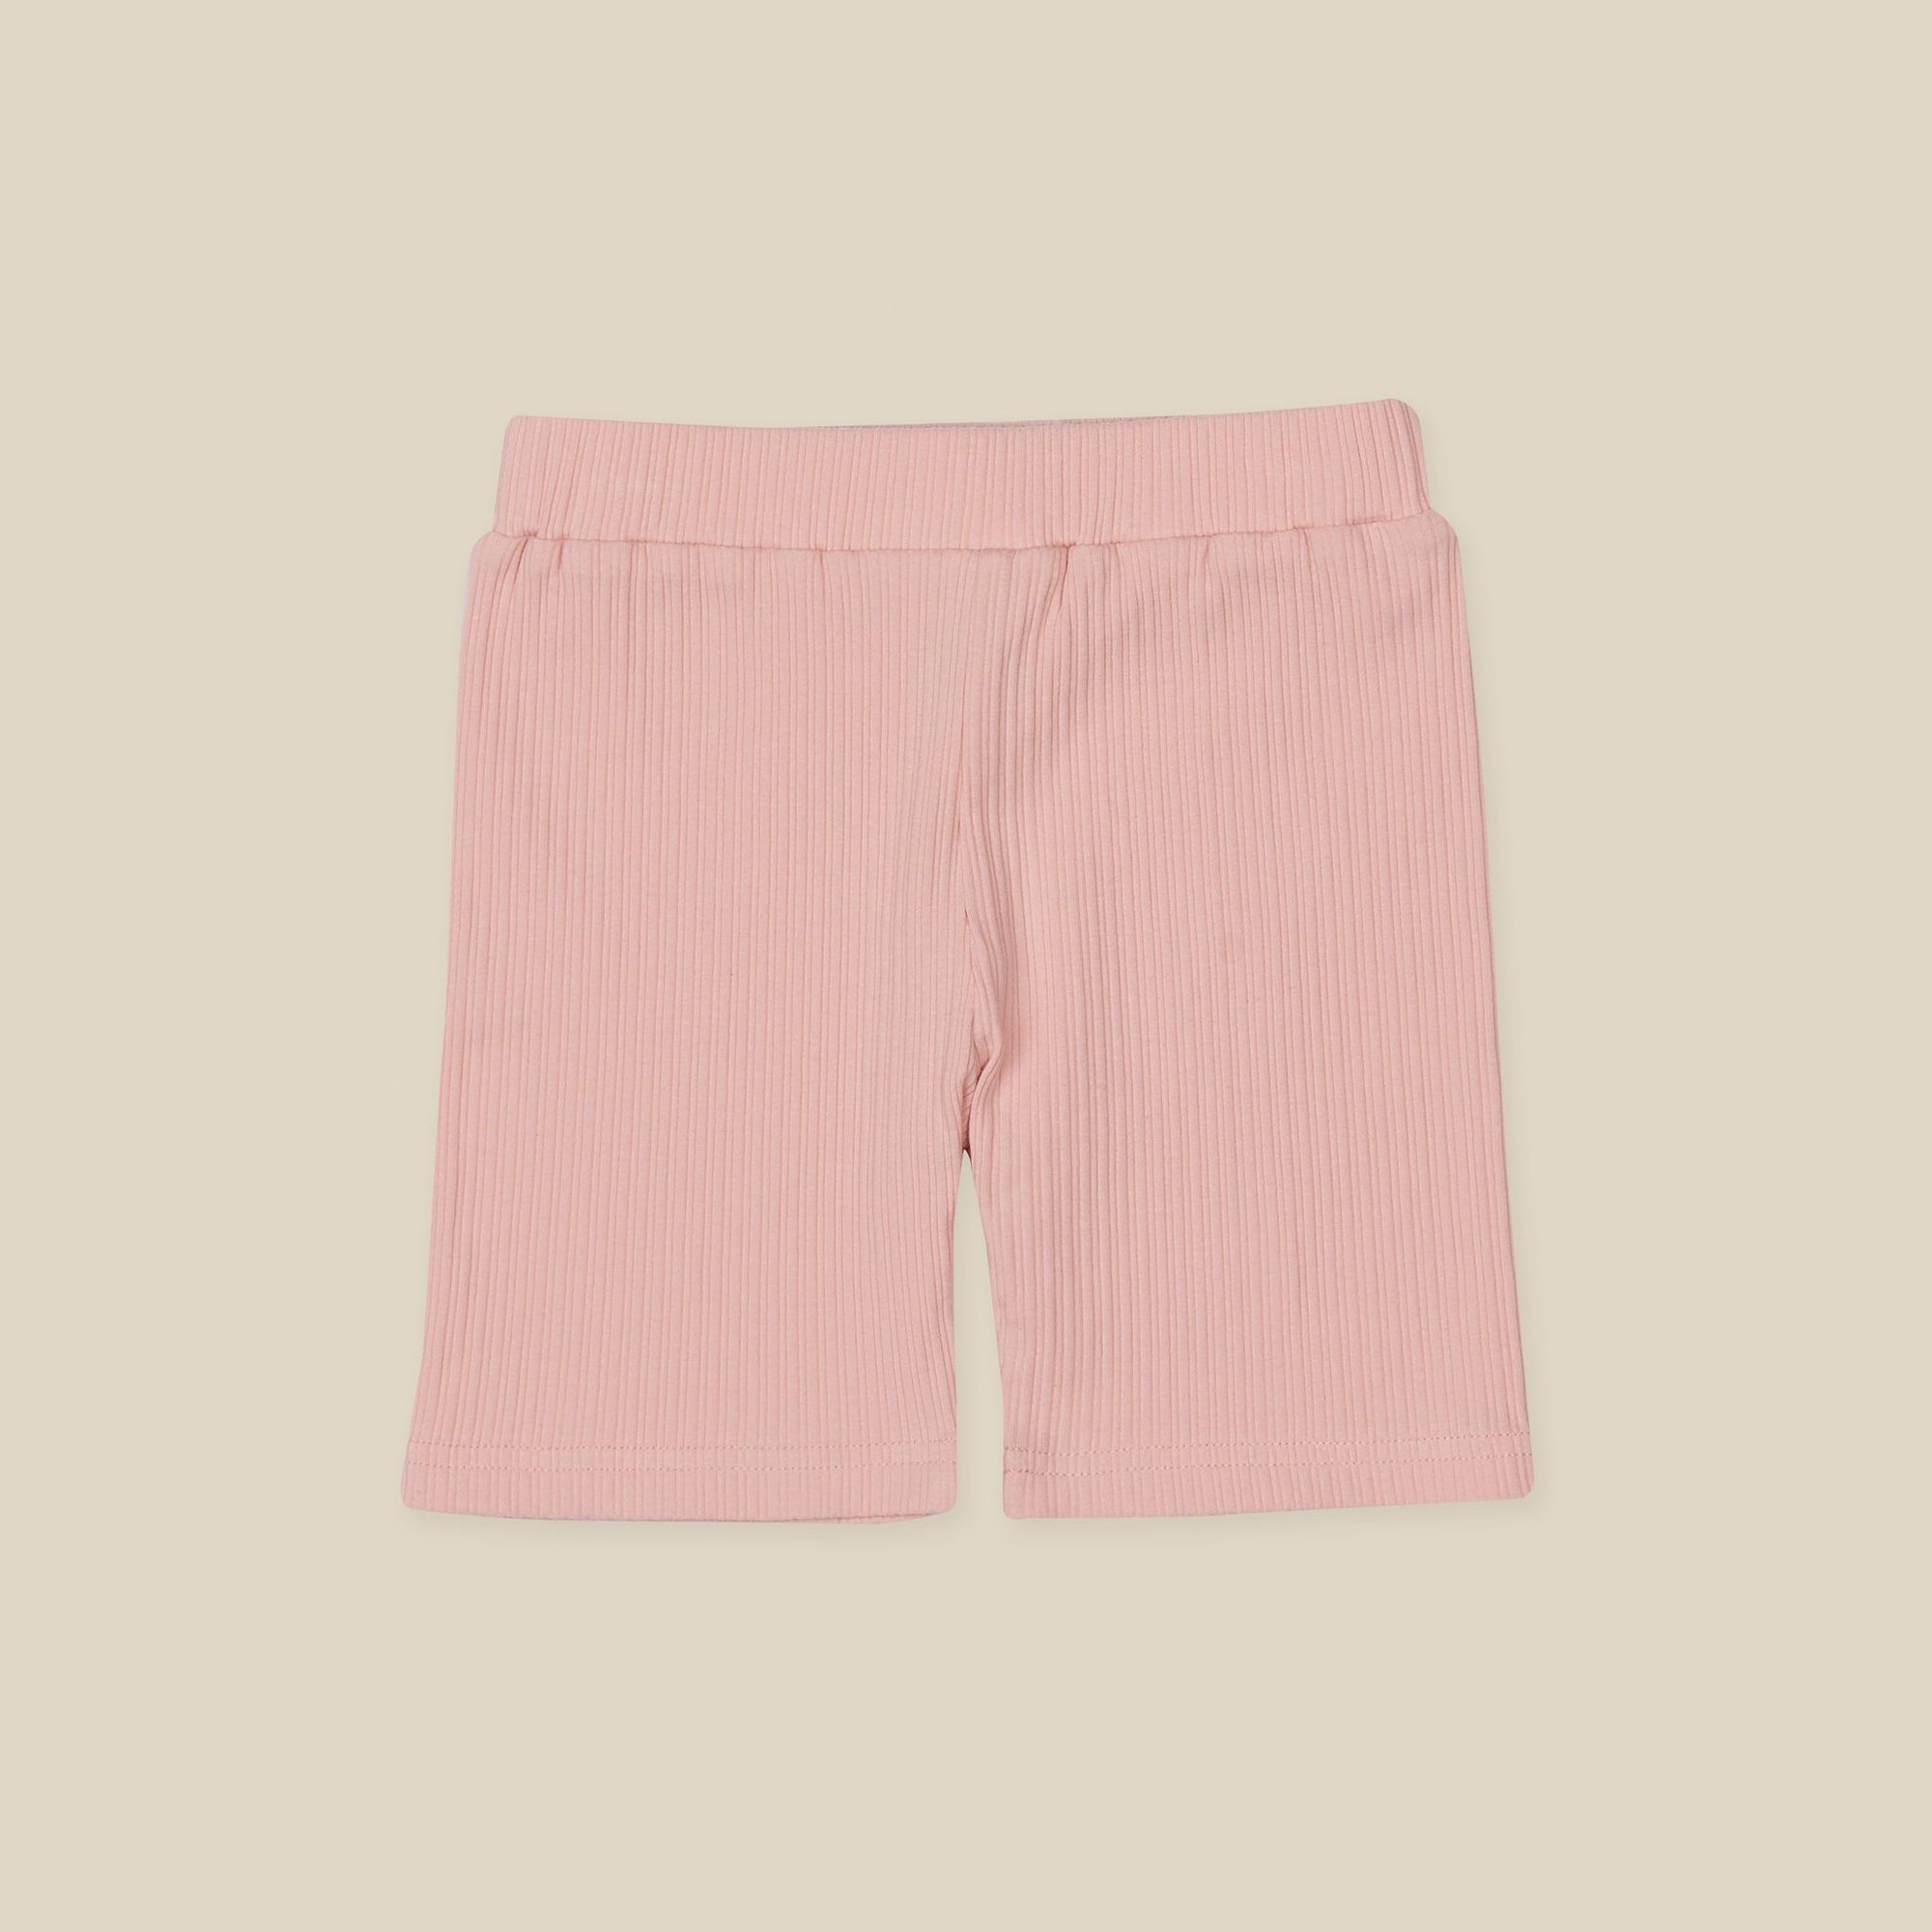 Shell Pink Rib Bike Shorts